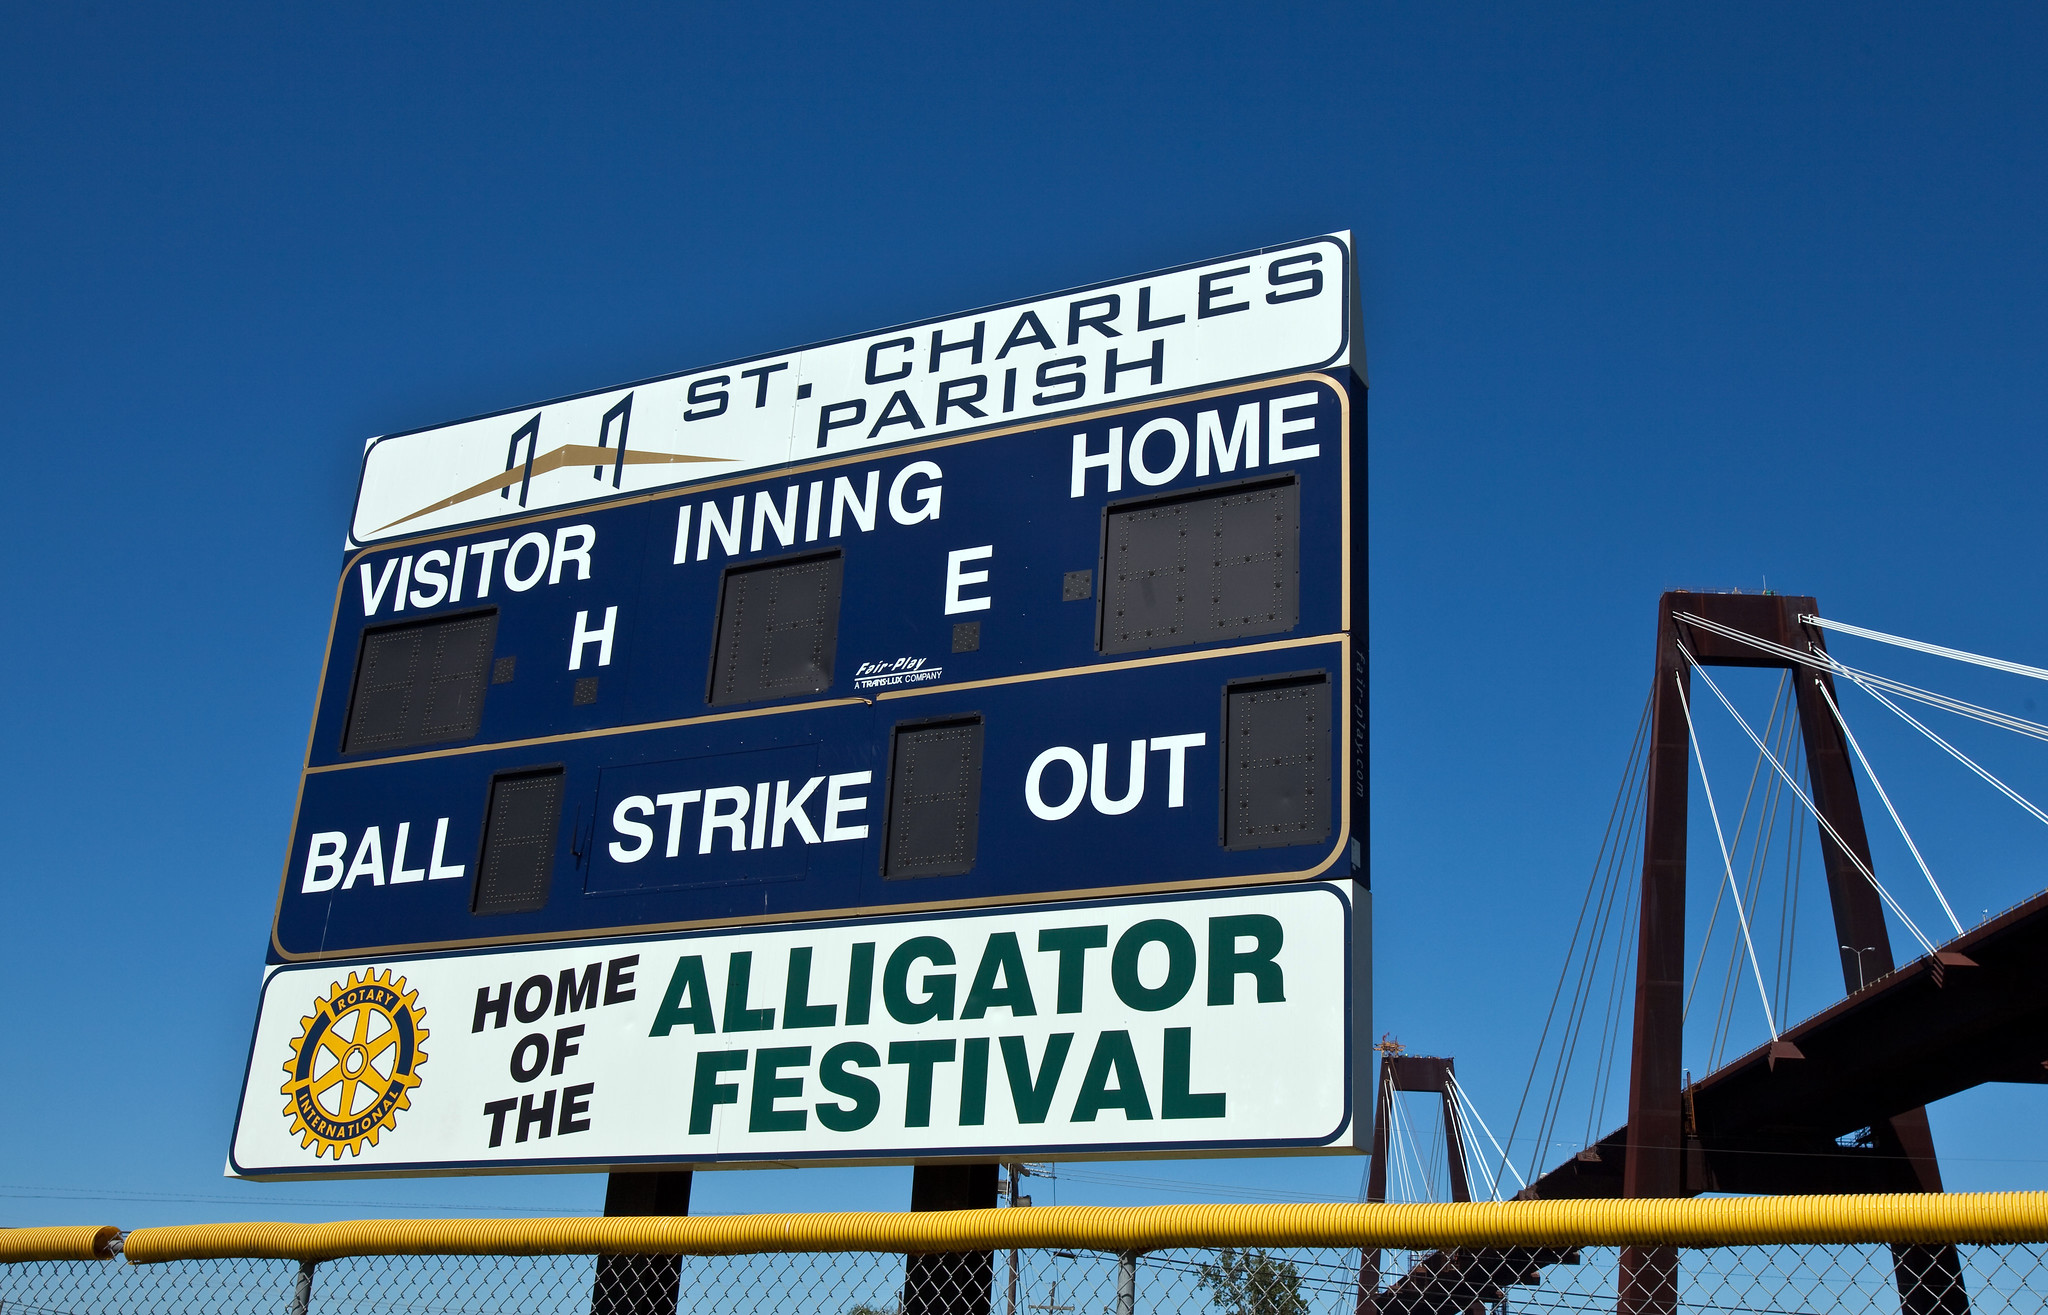 The St. Charles Parish baseball fields in New Orleans, LA